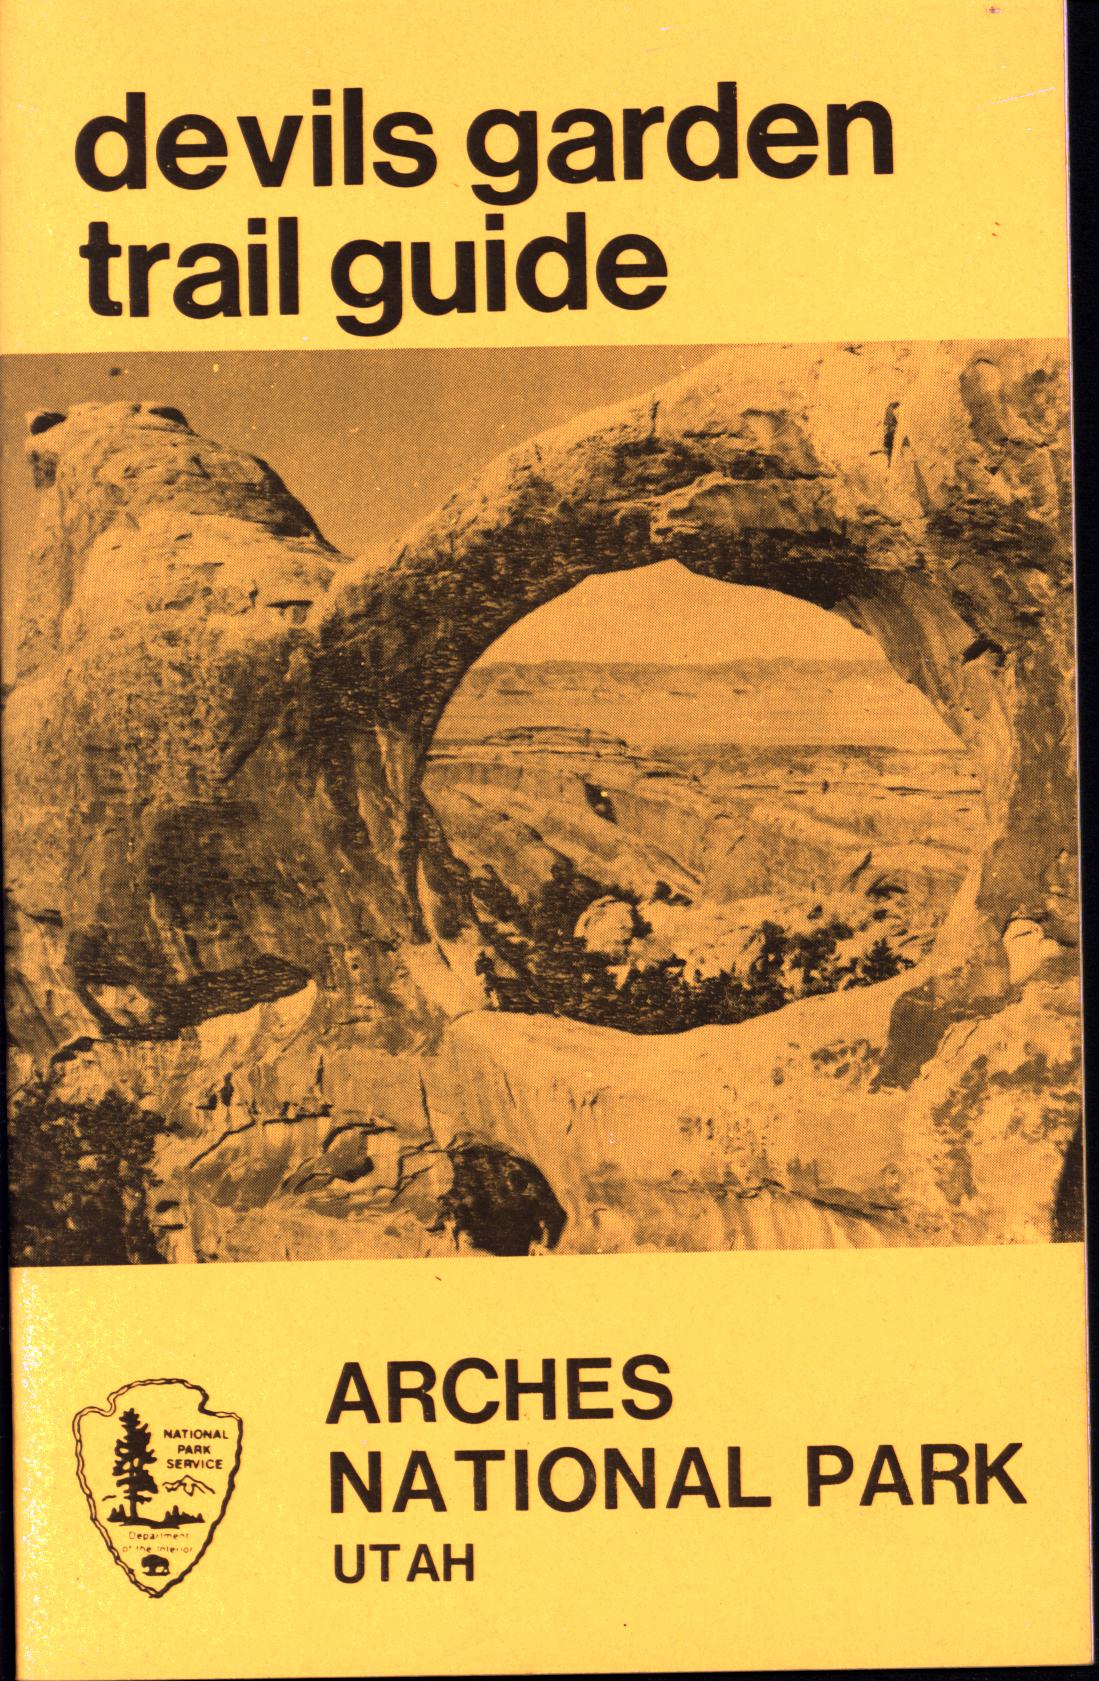 DEVILS GARDEN TRAIL GUIDE: Arches National Park.